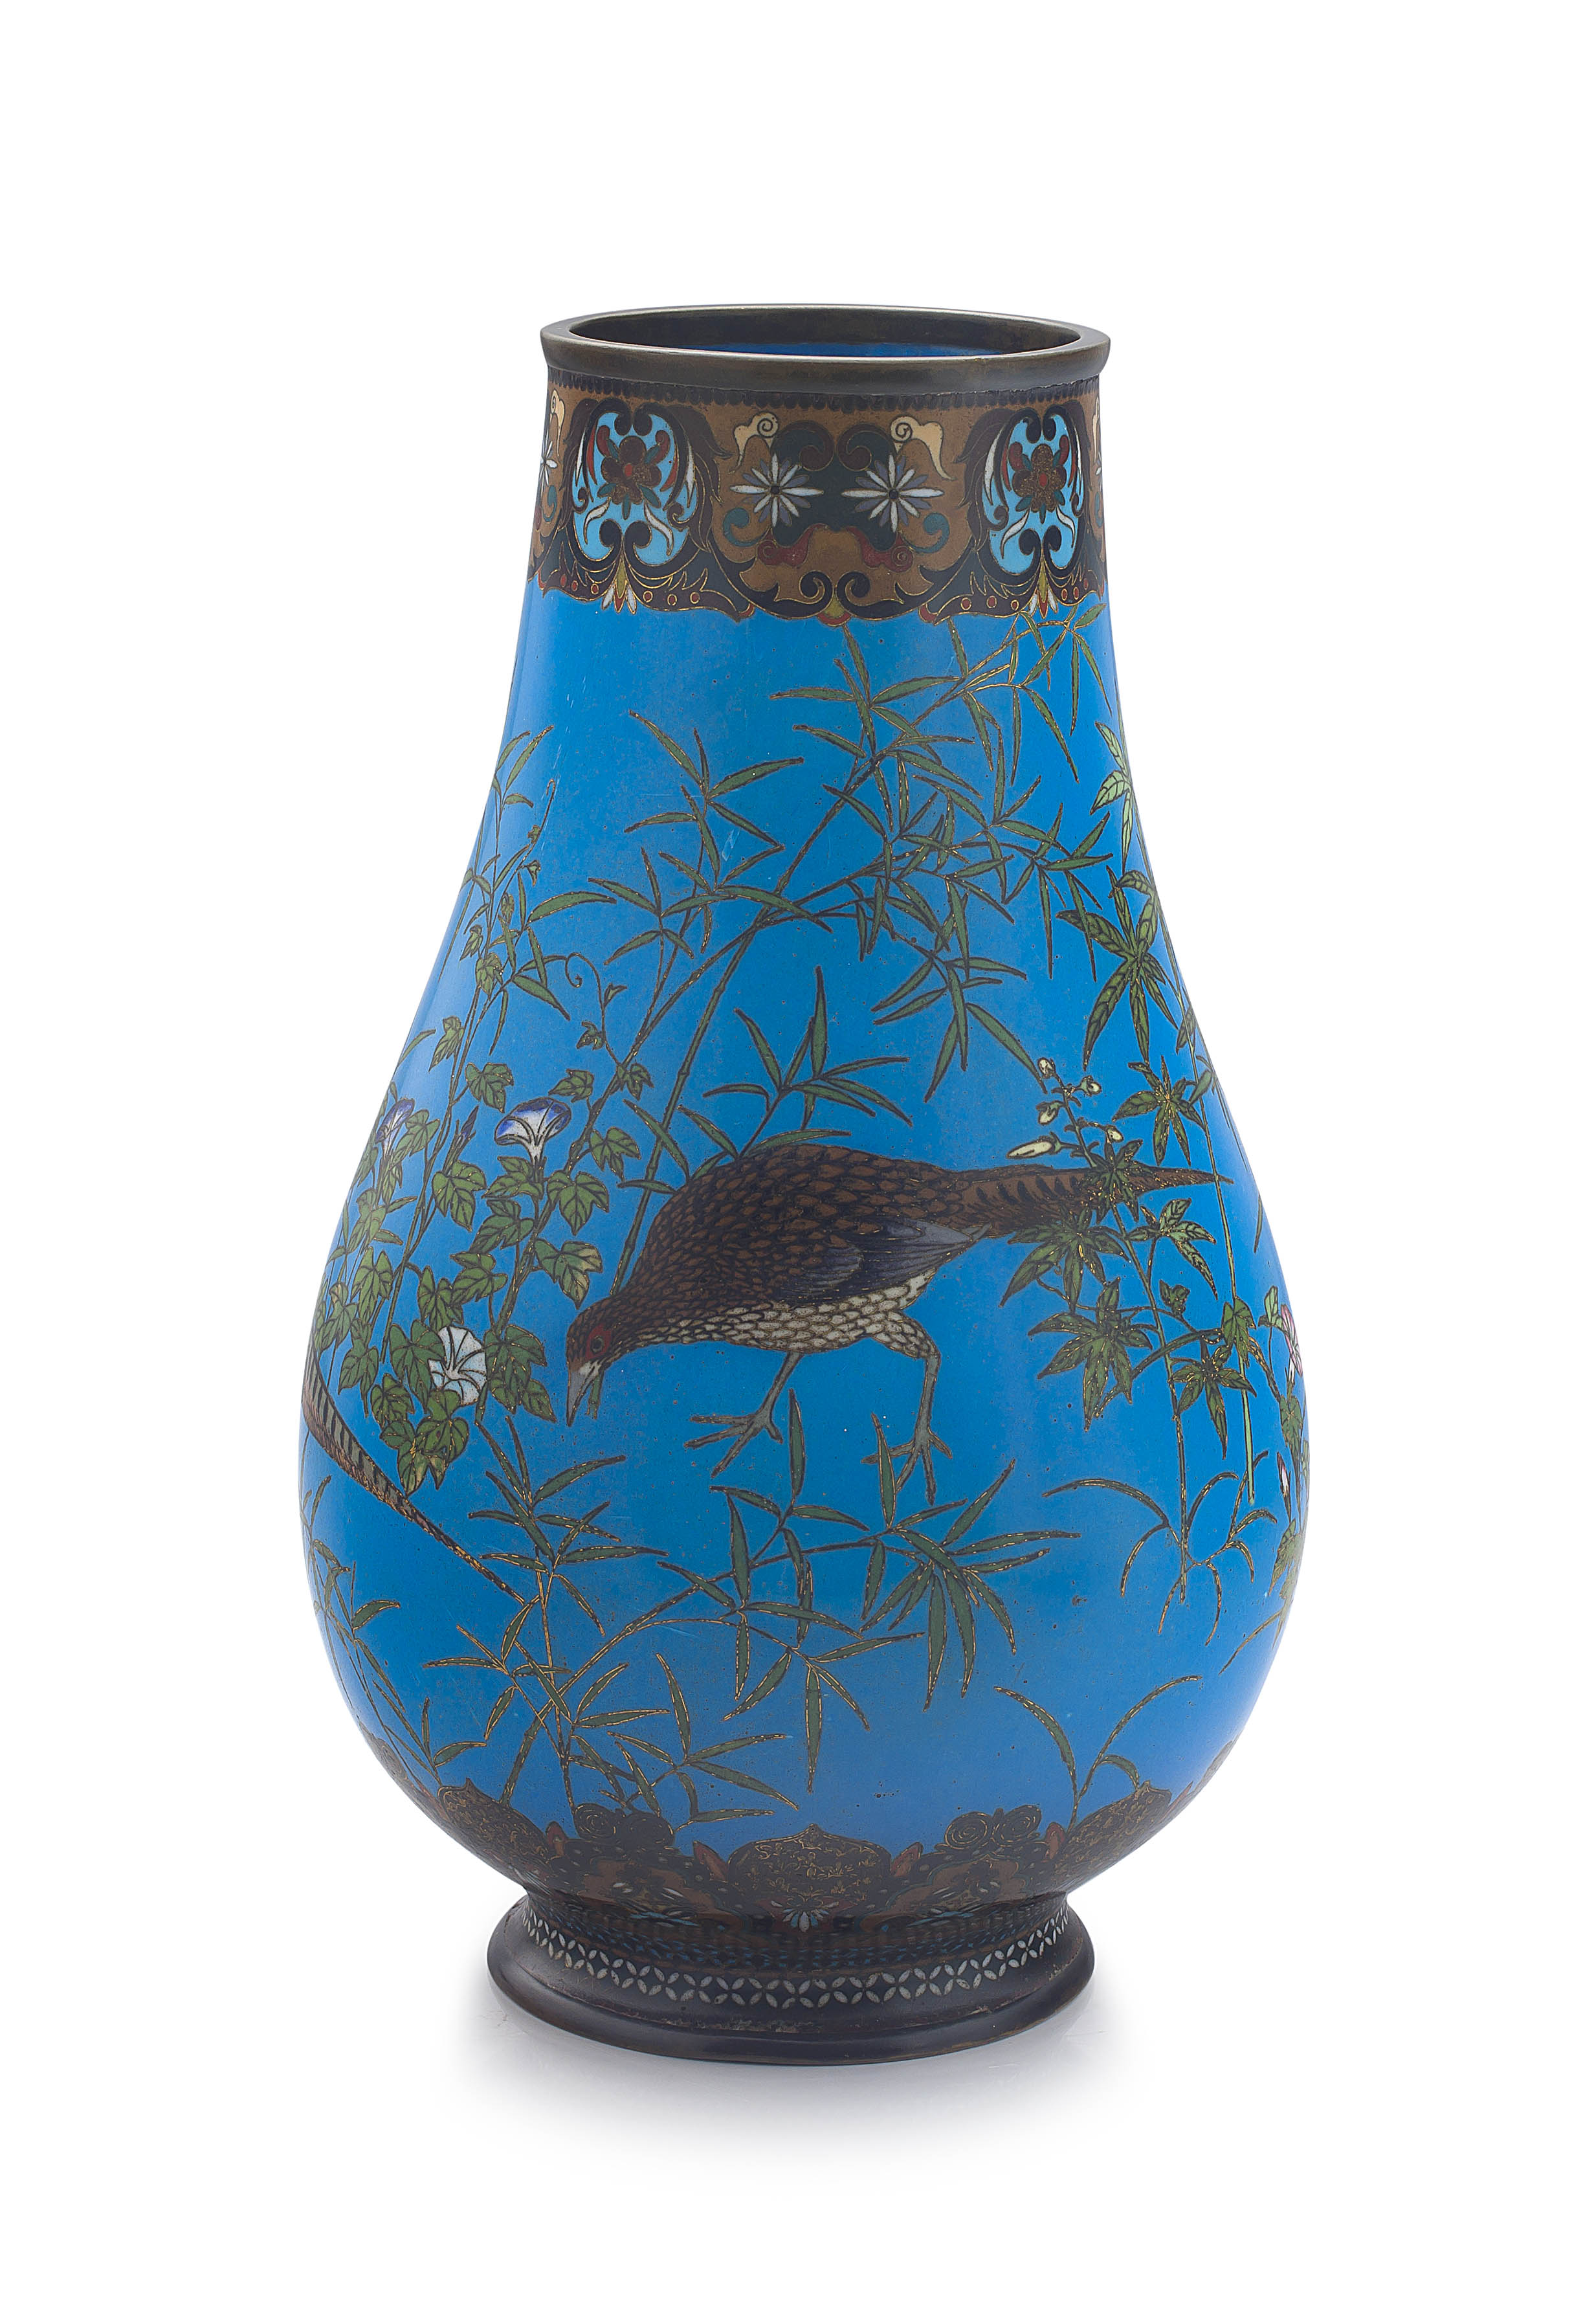 A Japanese cloisonné enamel vase, Meiji period, 1868-1912